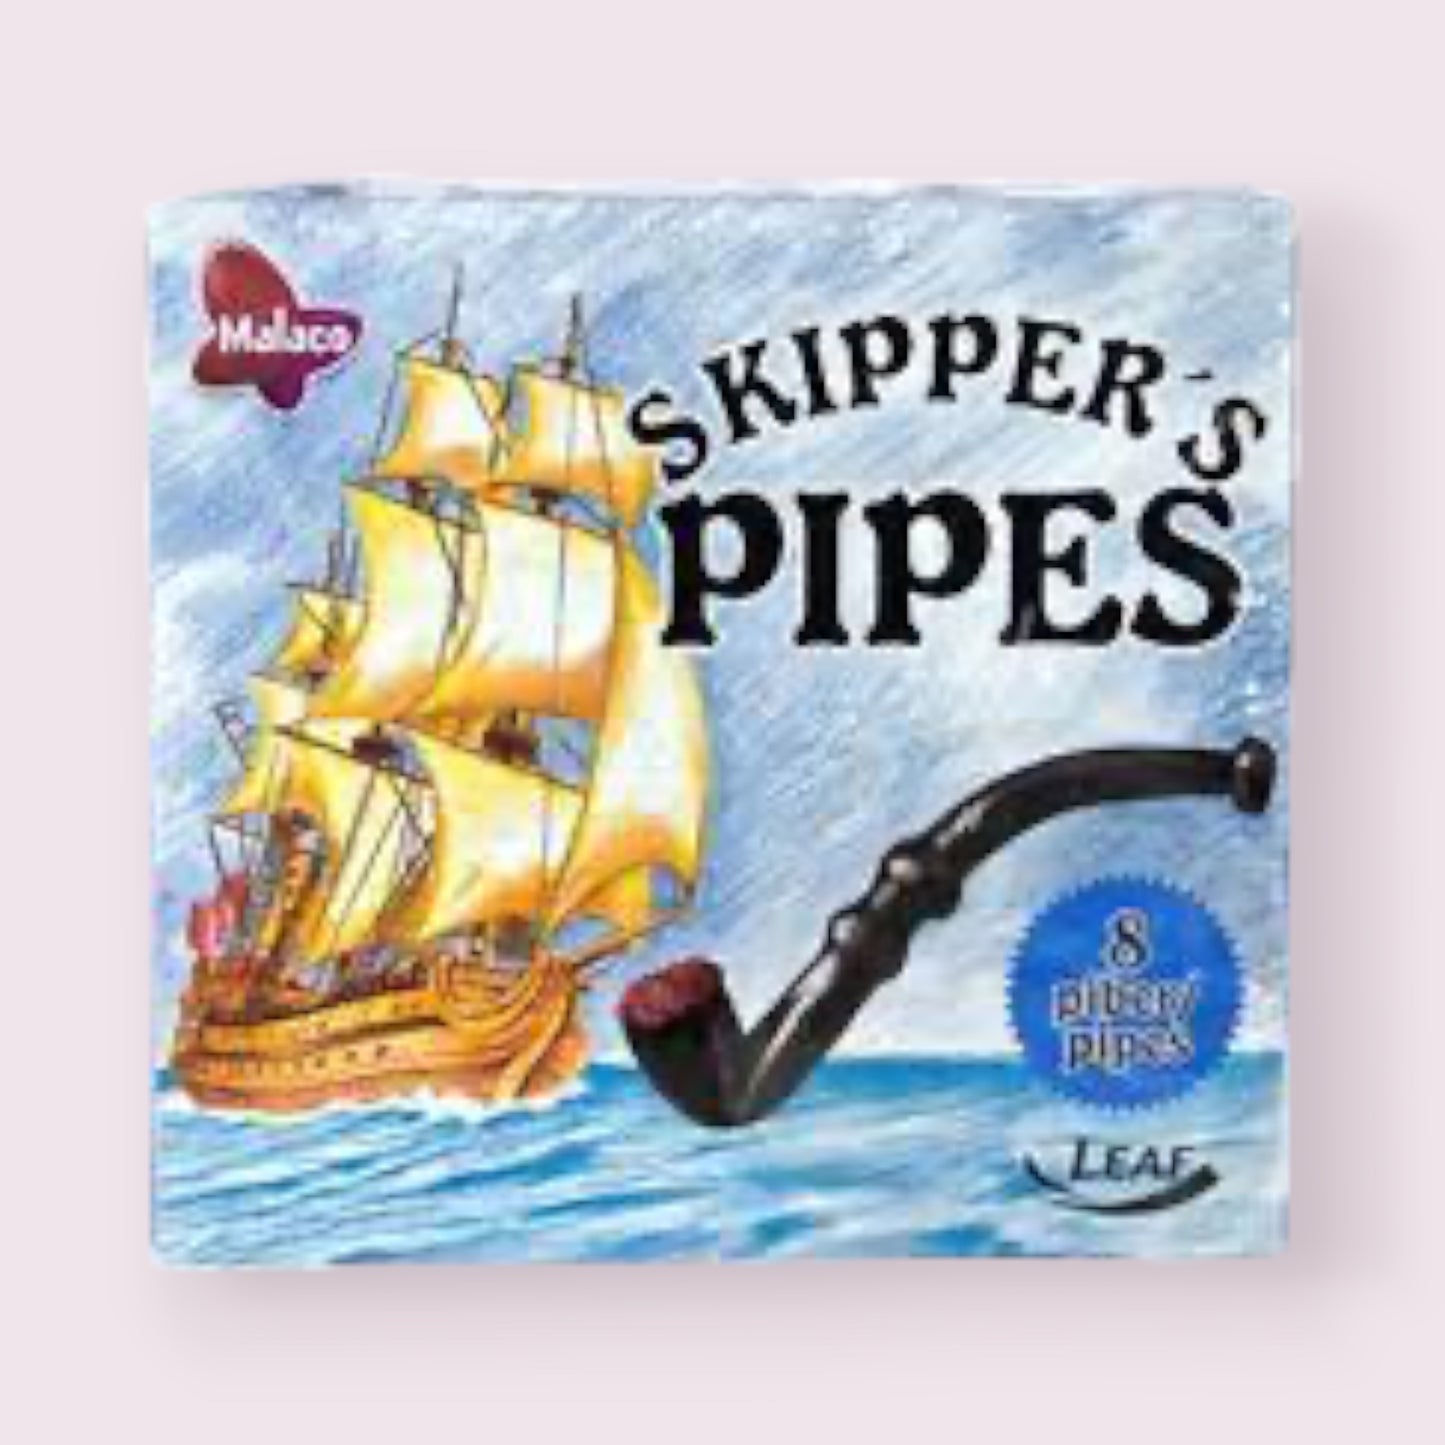 Skipper's Licorice Pipes Retro Pixie Candy Shoppe   